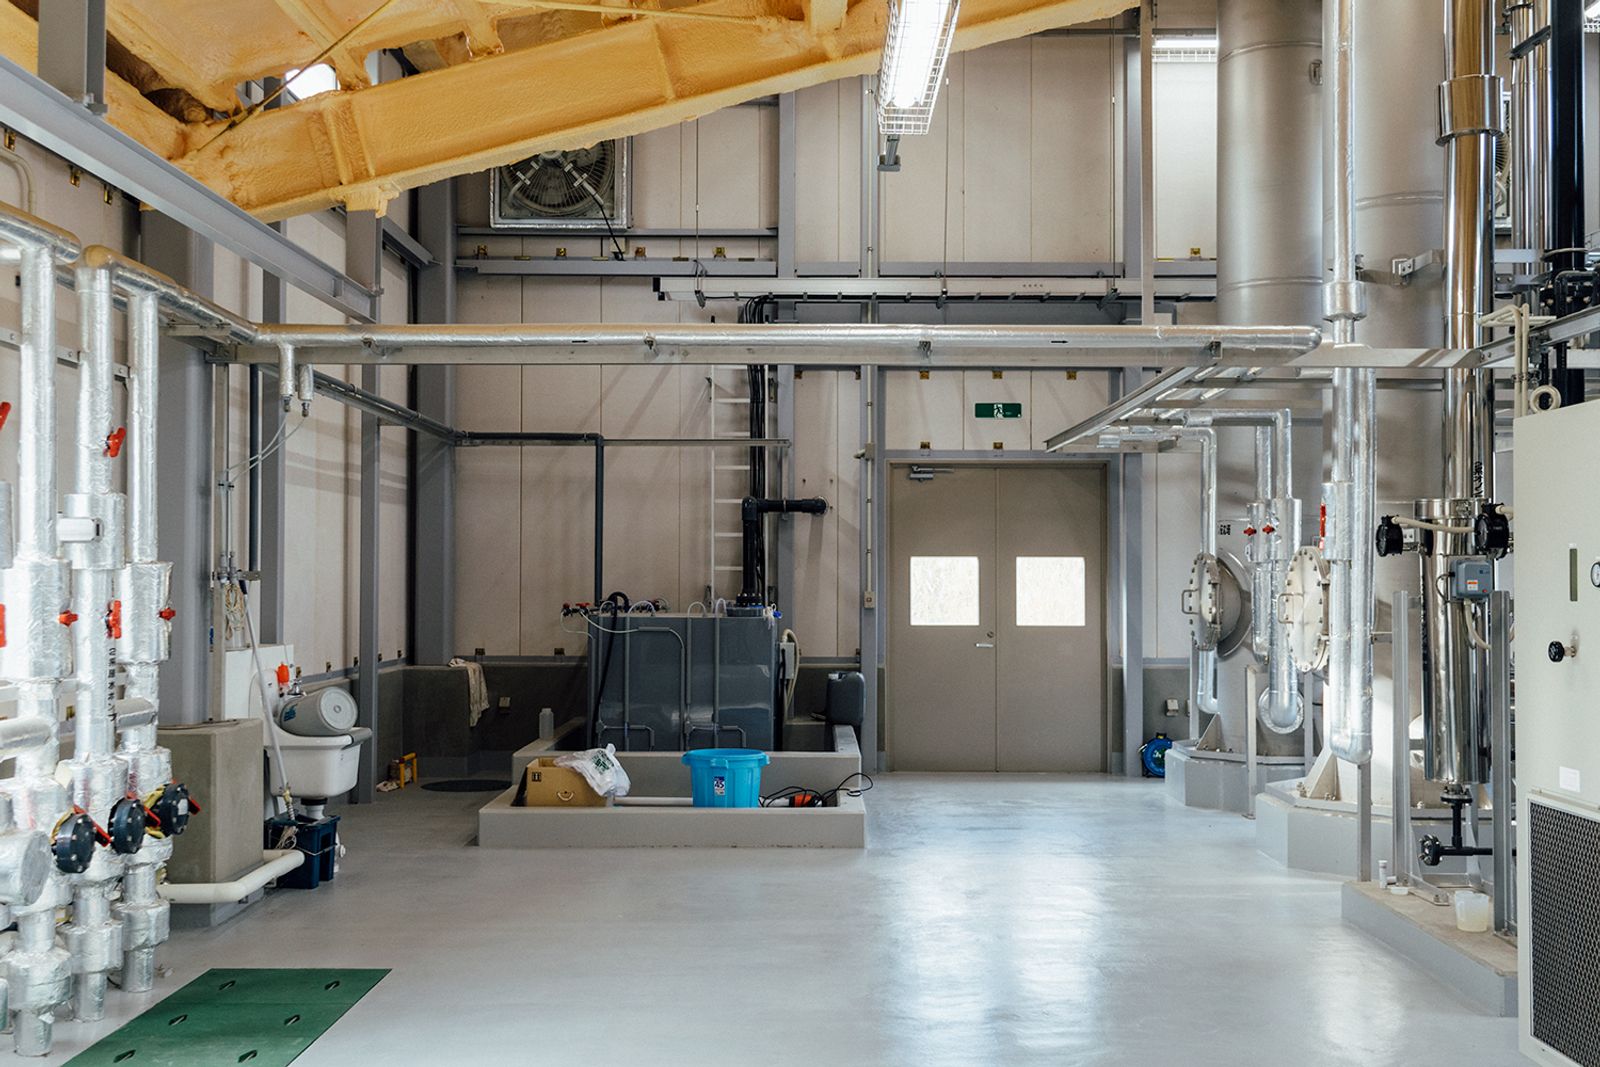 © Maki Hayashida - The Water Treatment Facility of Noshiro Industrial Waste Treatment Center in Akita, 2020